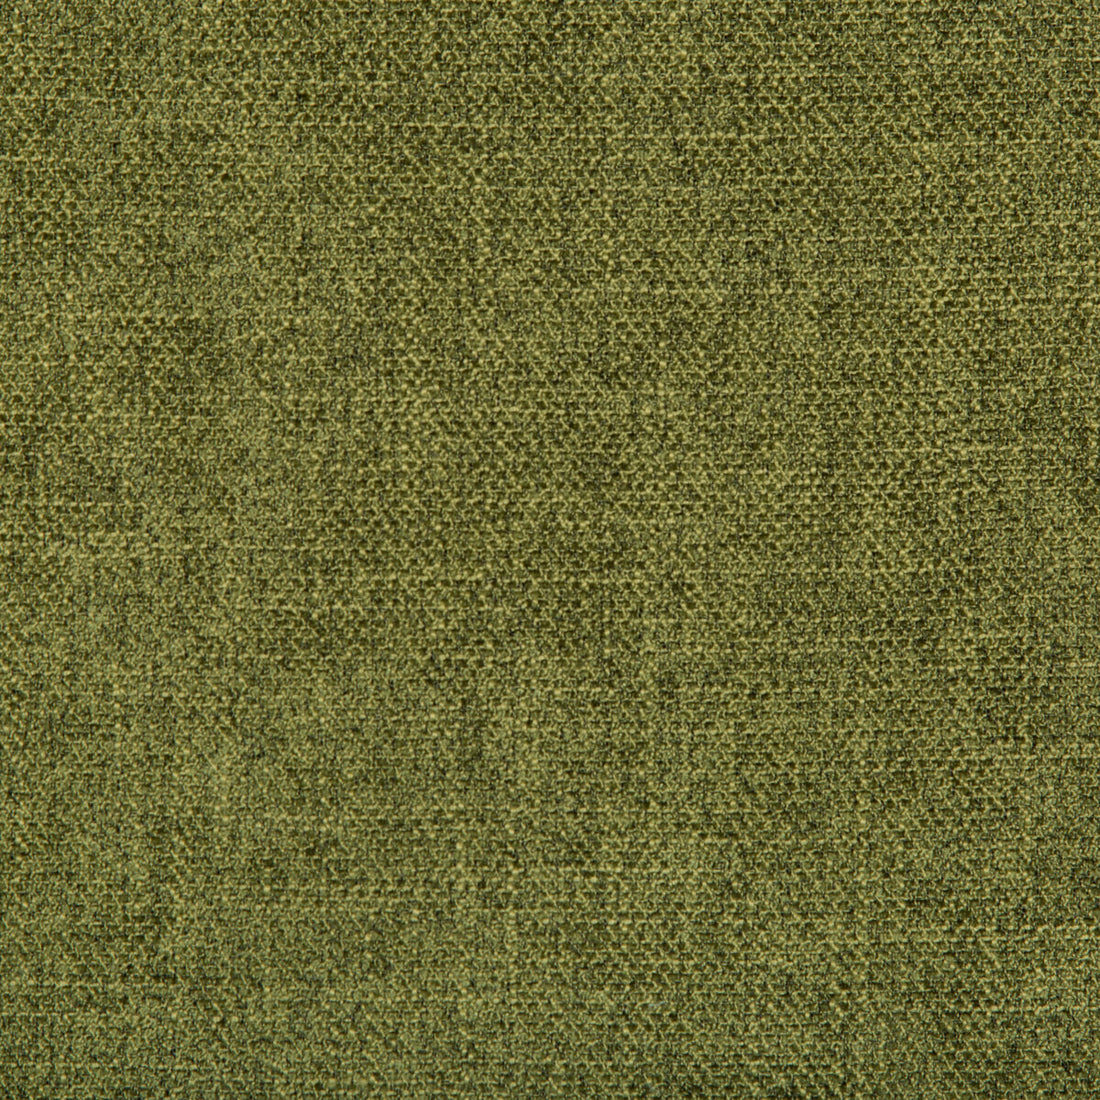 Kf Smt fabric - pattern 35060.303.0 - by Kravet Smart in the Performance Kravetarmor collection